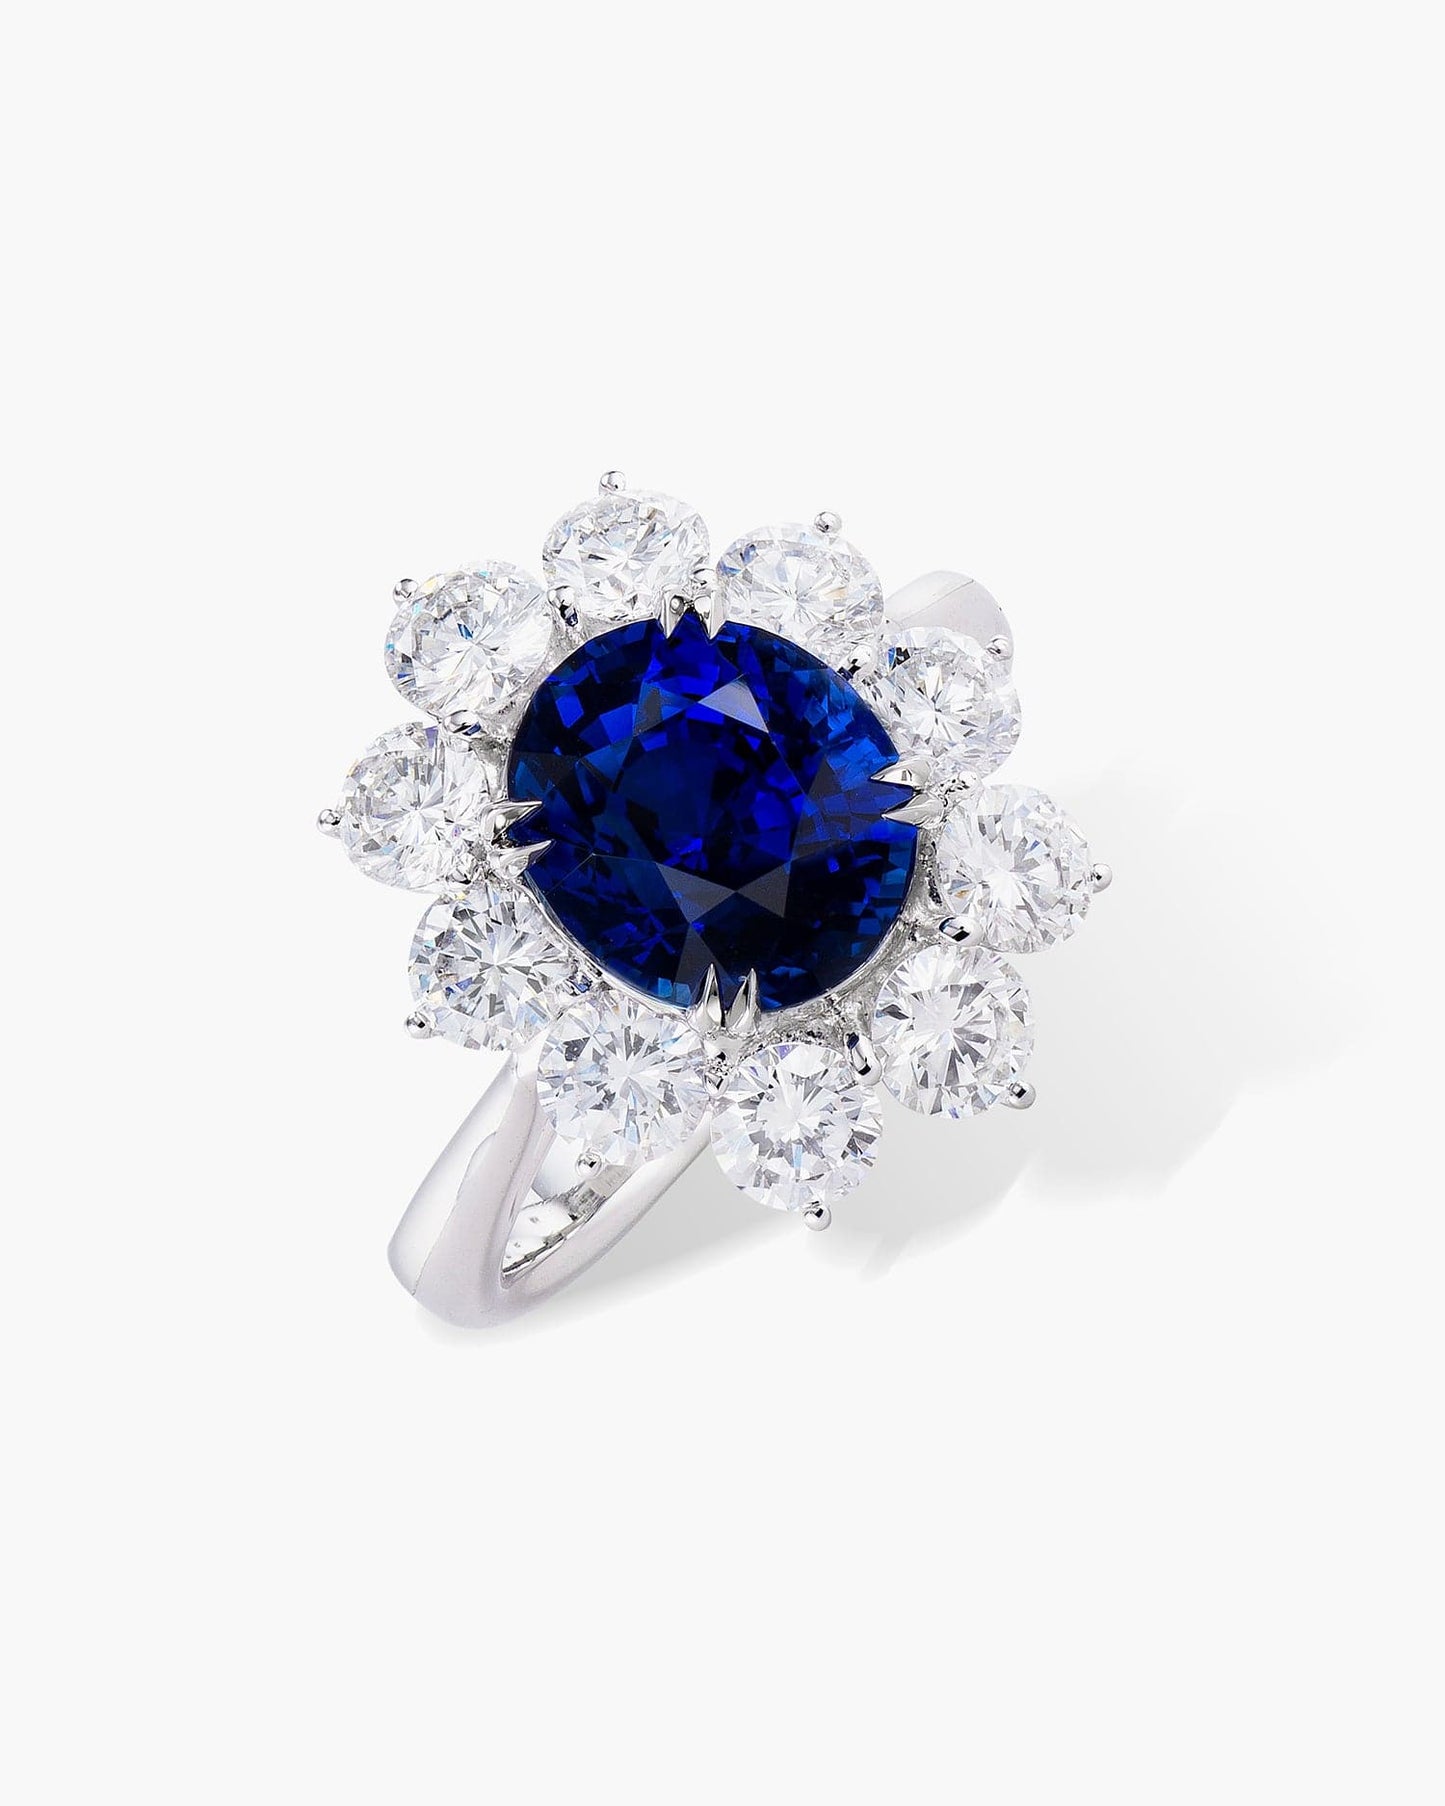 4.01 carat Oval Shape Sapphire and Diamond Ring